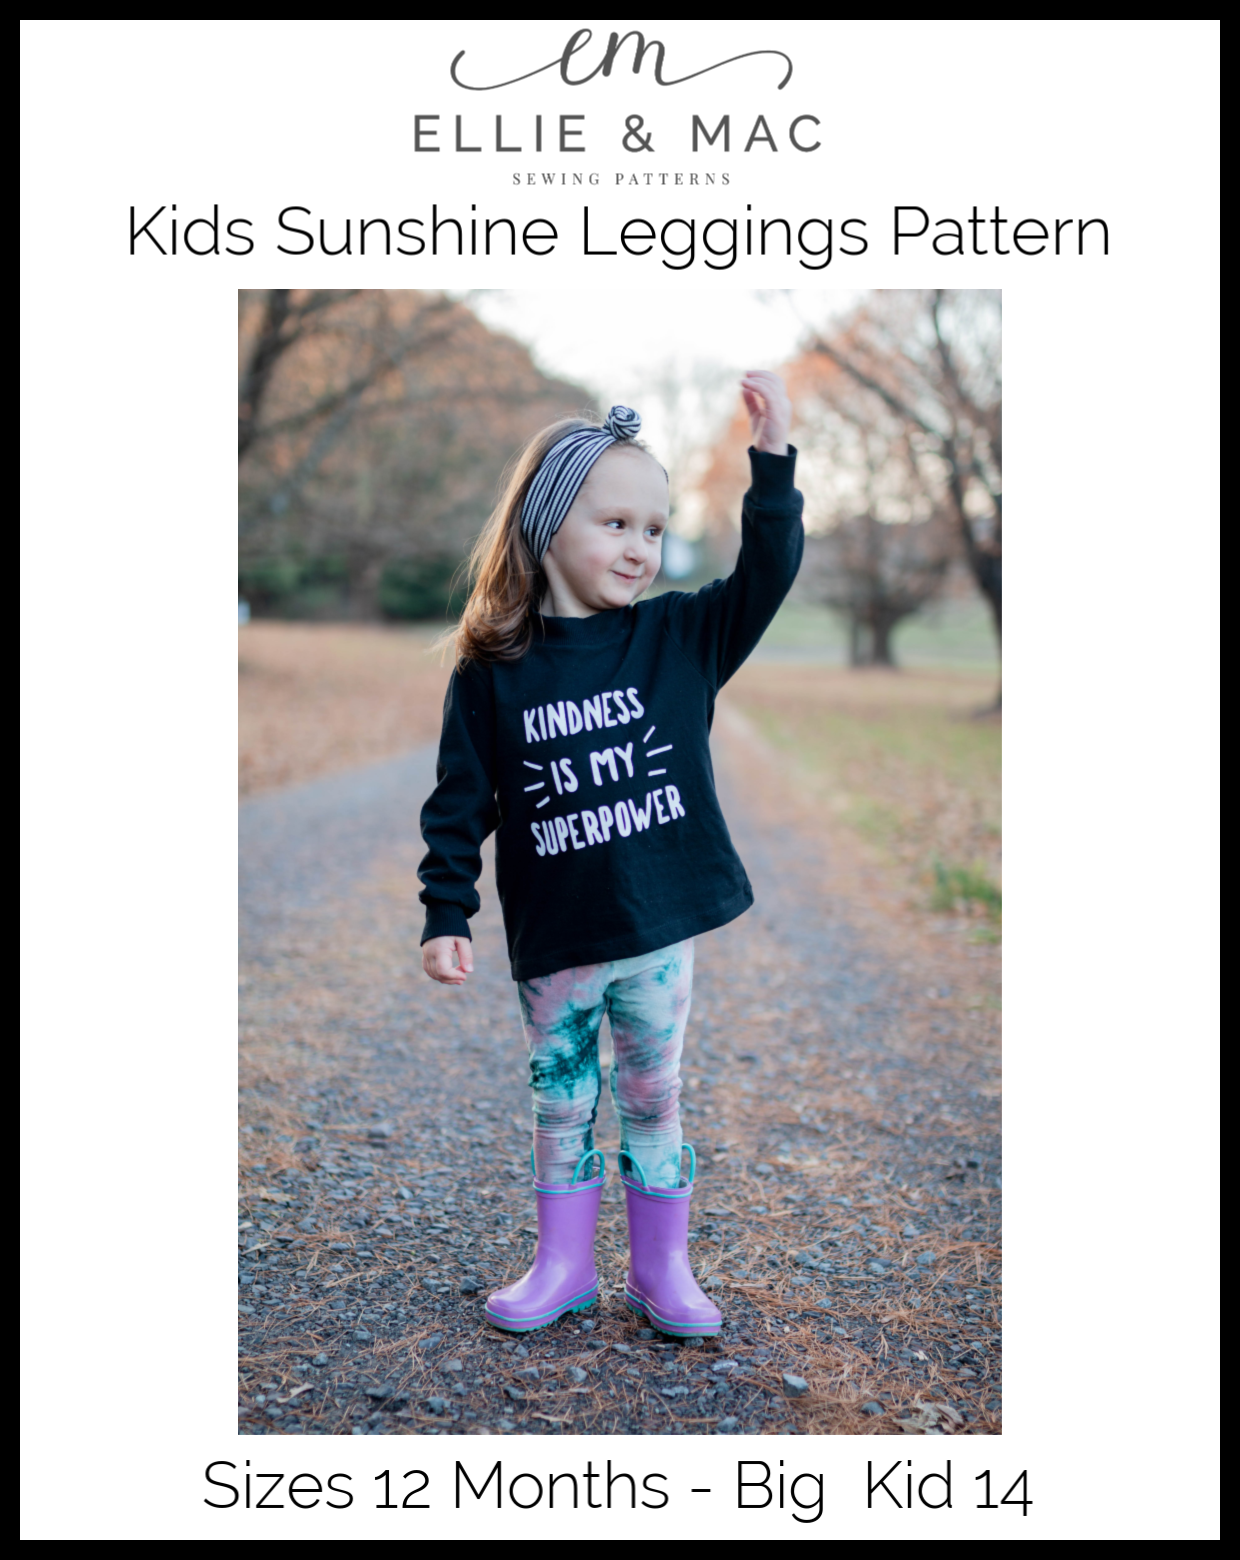 girl pants printing Flower girls leggings Toddler Classic Leggings 2-1